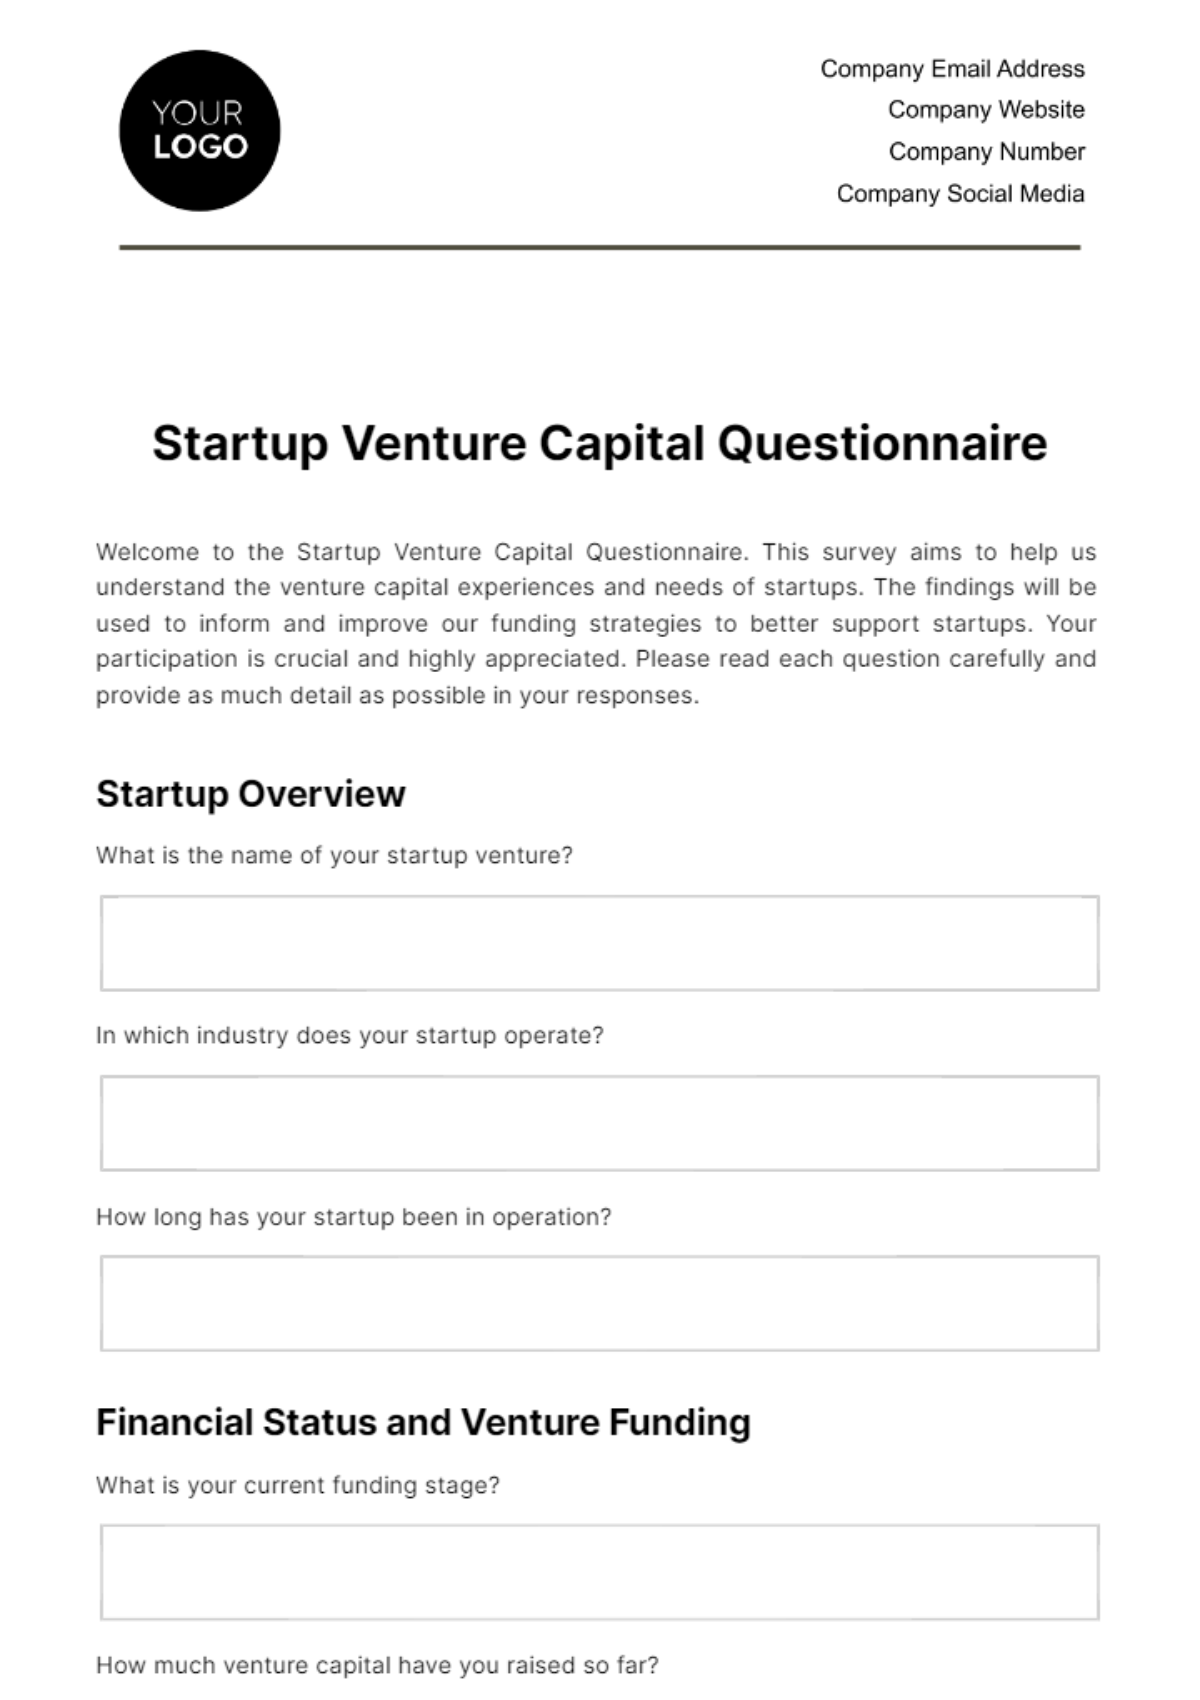 Startup Venture Capital Questionnaire Template